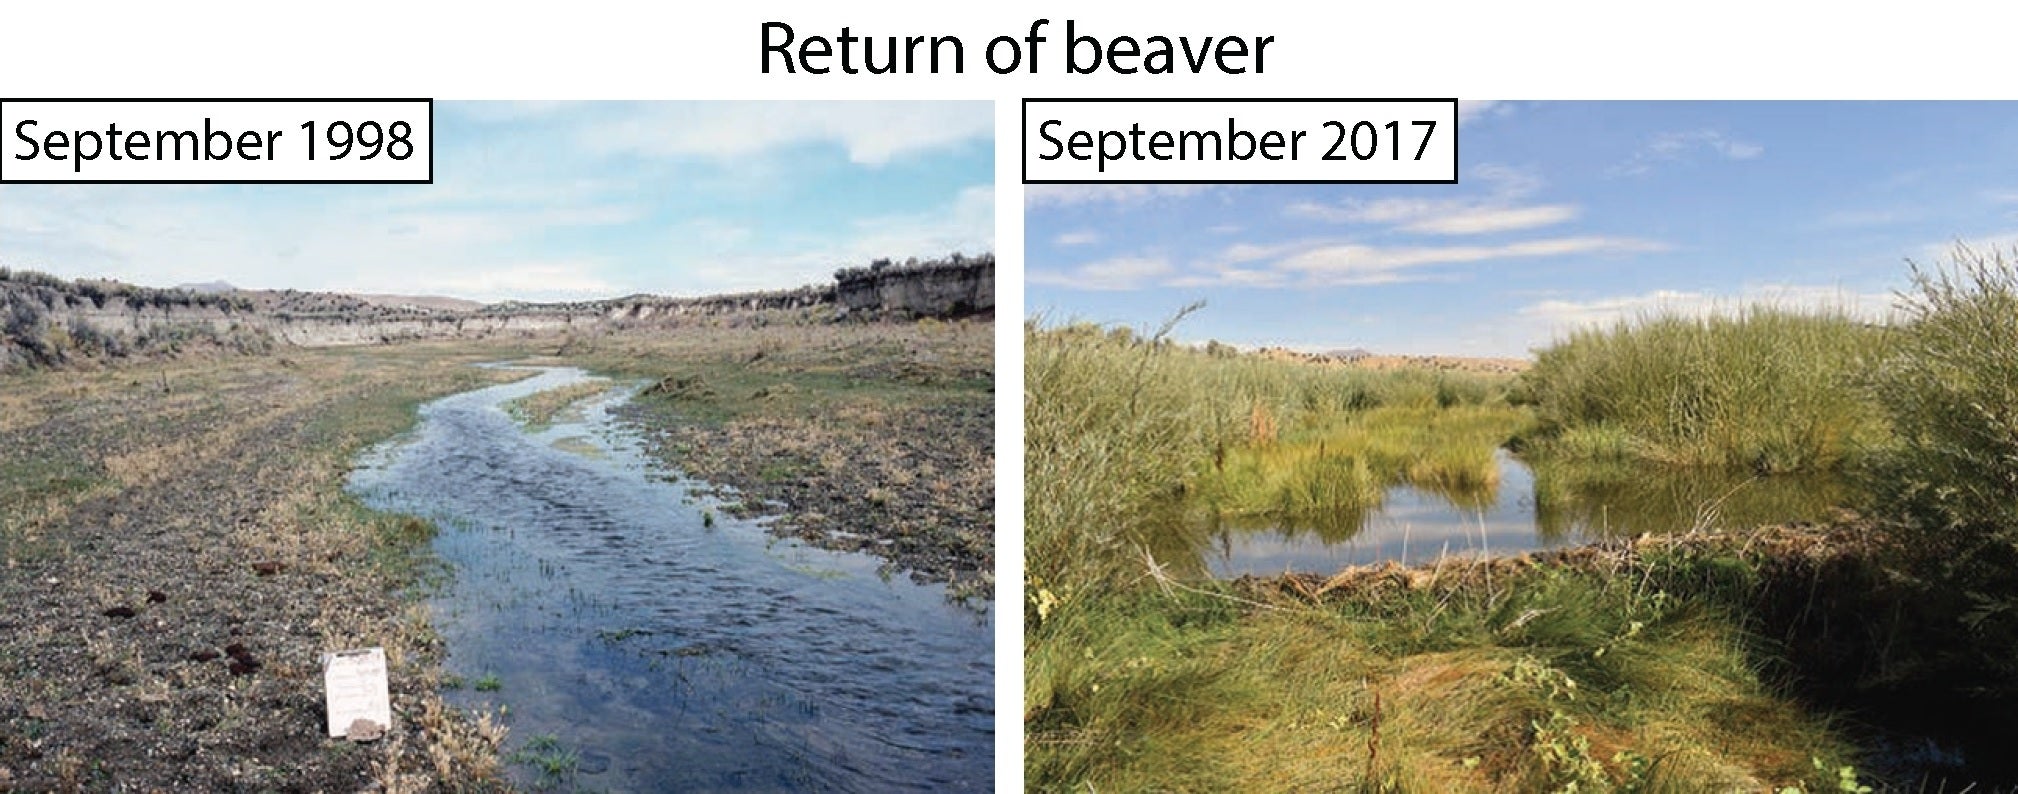 Perubahan ekosistem sungai sebelum dan sesudah pembuatan bendungan berang-berang di lahan publik